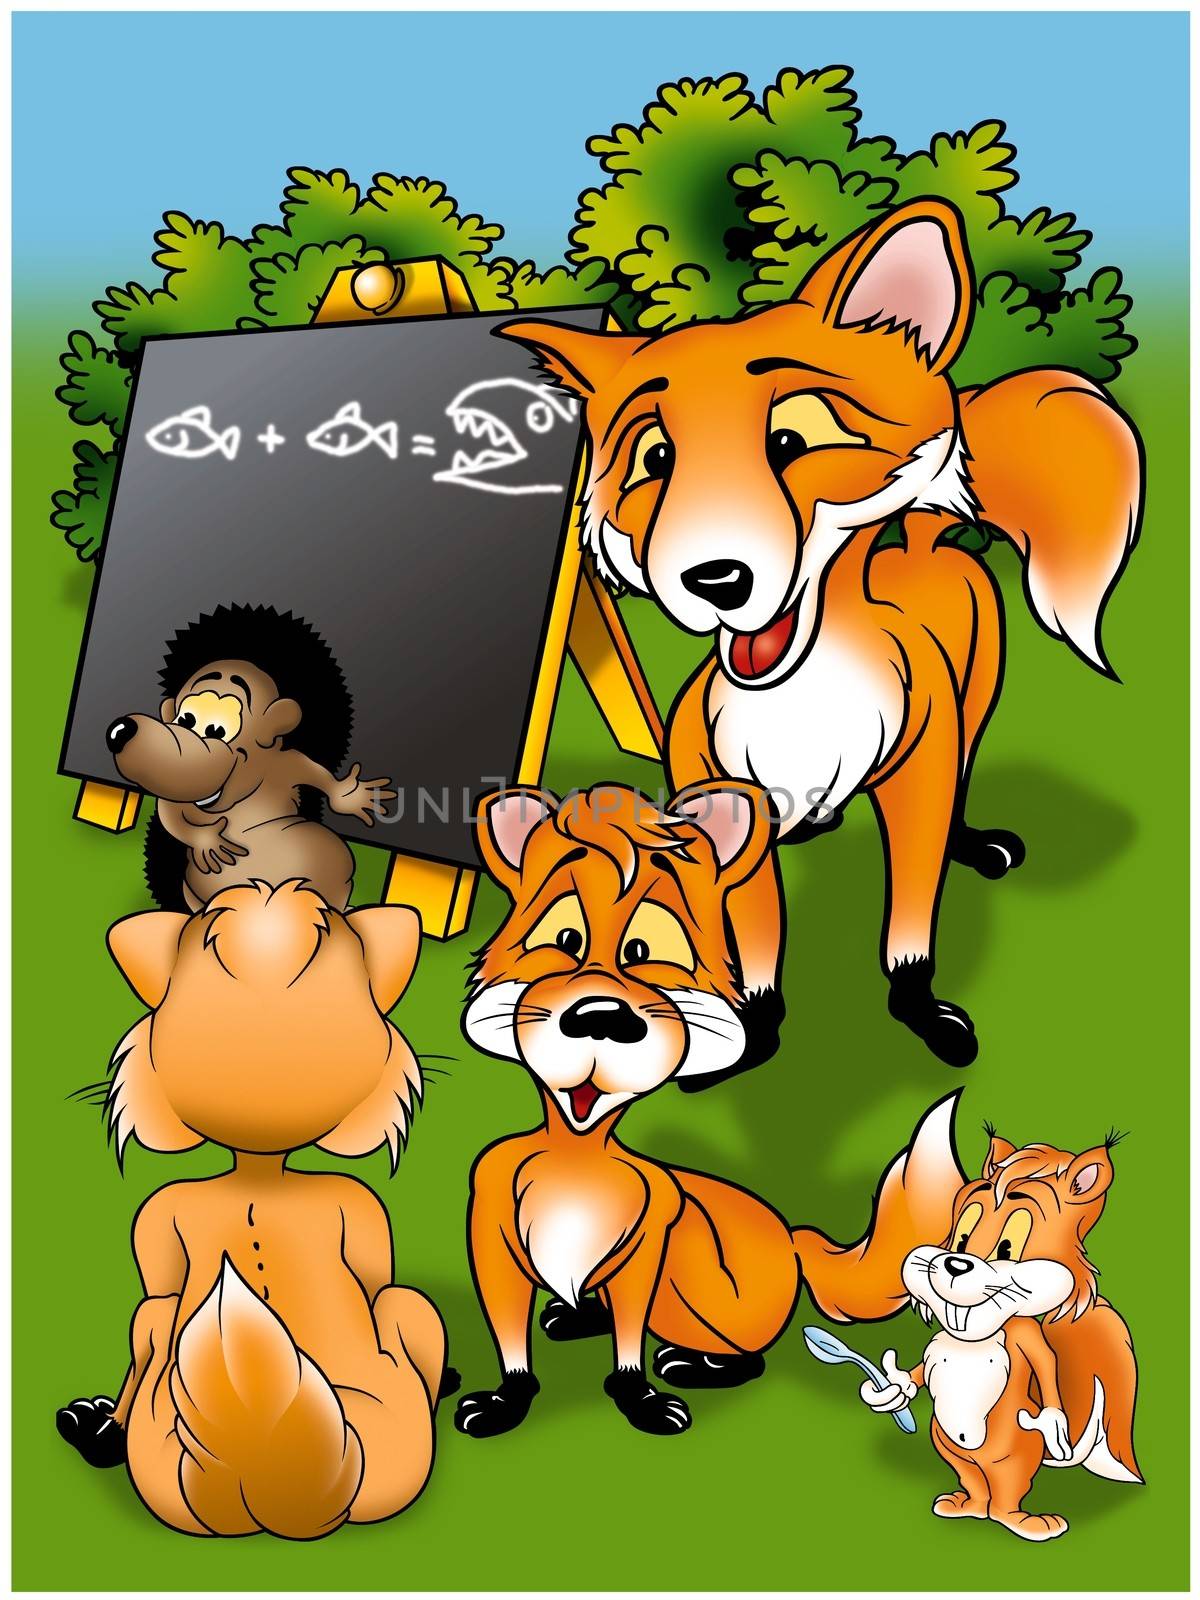 Foxes in School - Cartoon Illustration, Bitmap